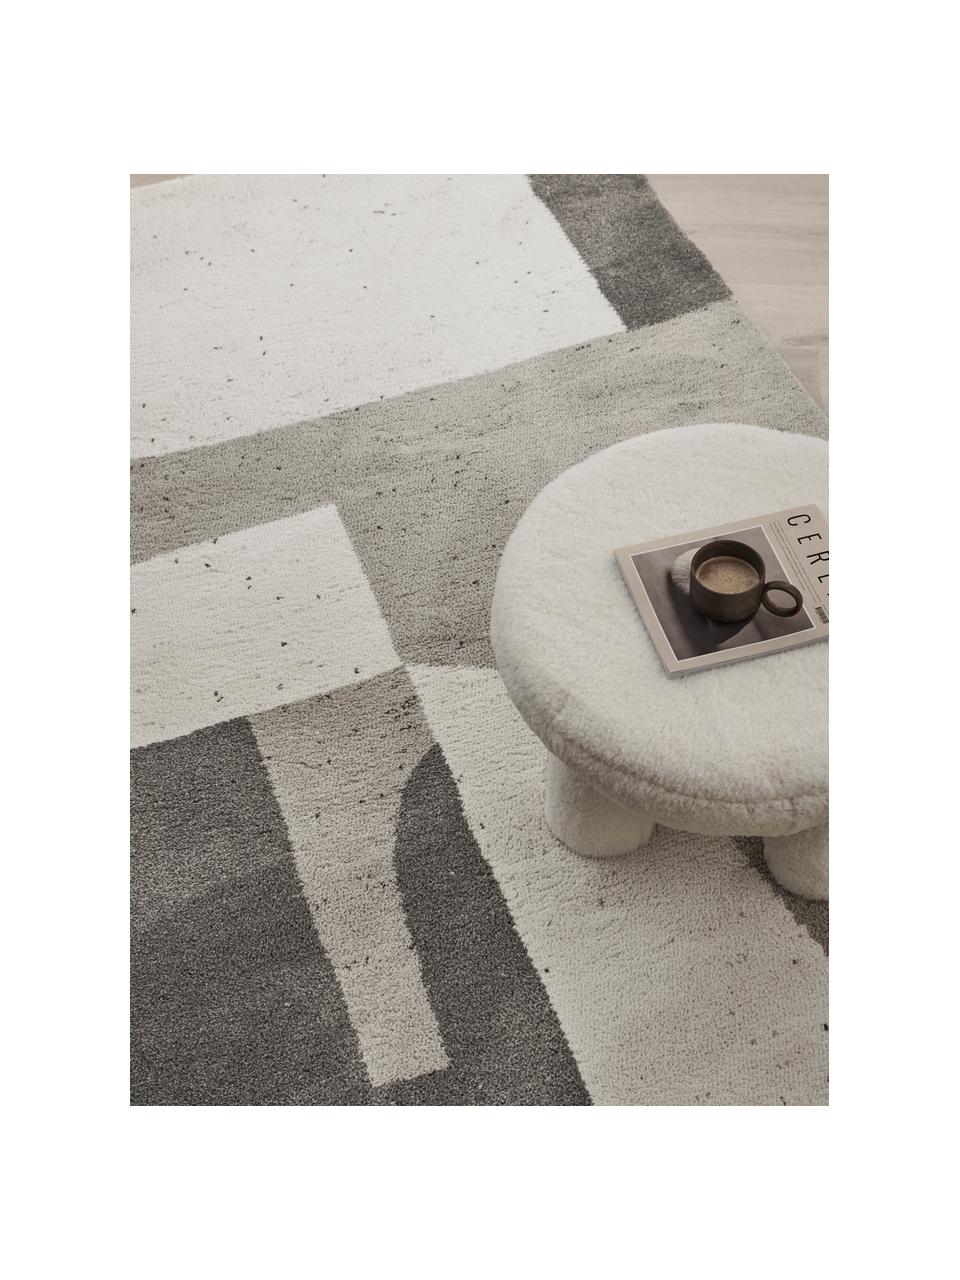 Teppich Bolzano mit abstraktem Muster, 100% Recyceltes Polypropylen, Mehrfarbig, B 135 x L 190 cm (Größe S)